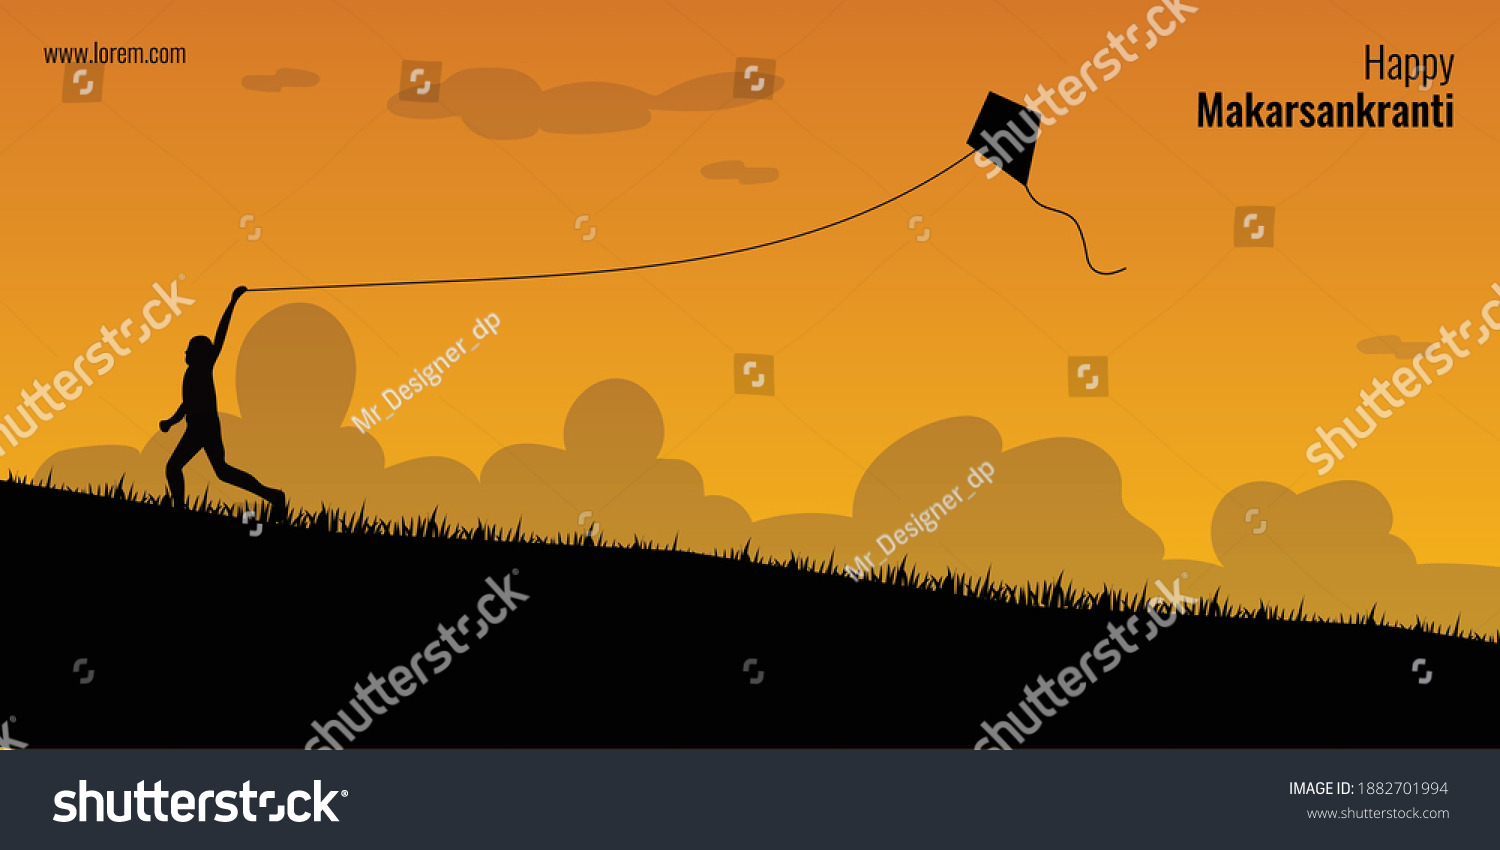 SVG of Happy Makar Sankranti concept. A kid flying kite on ground silhouette. svg